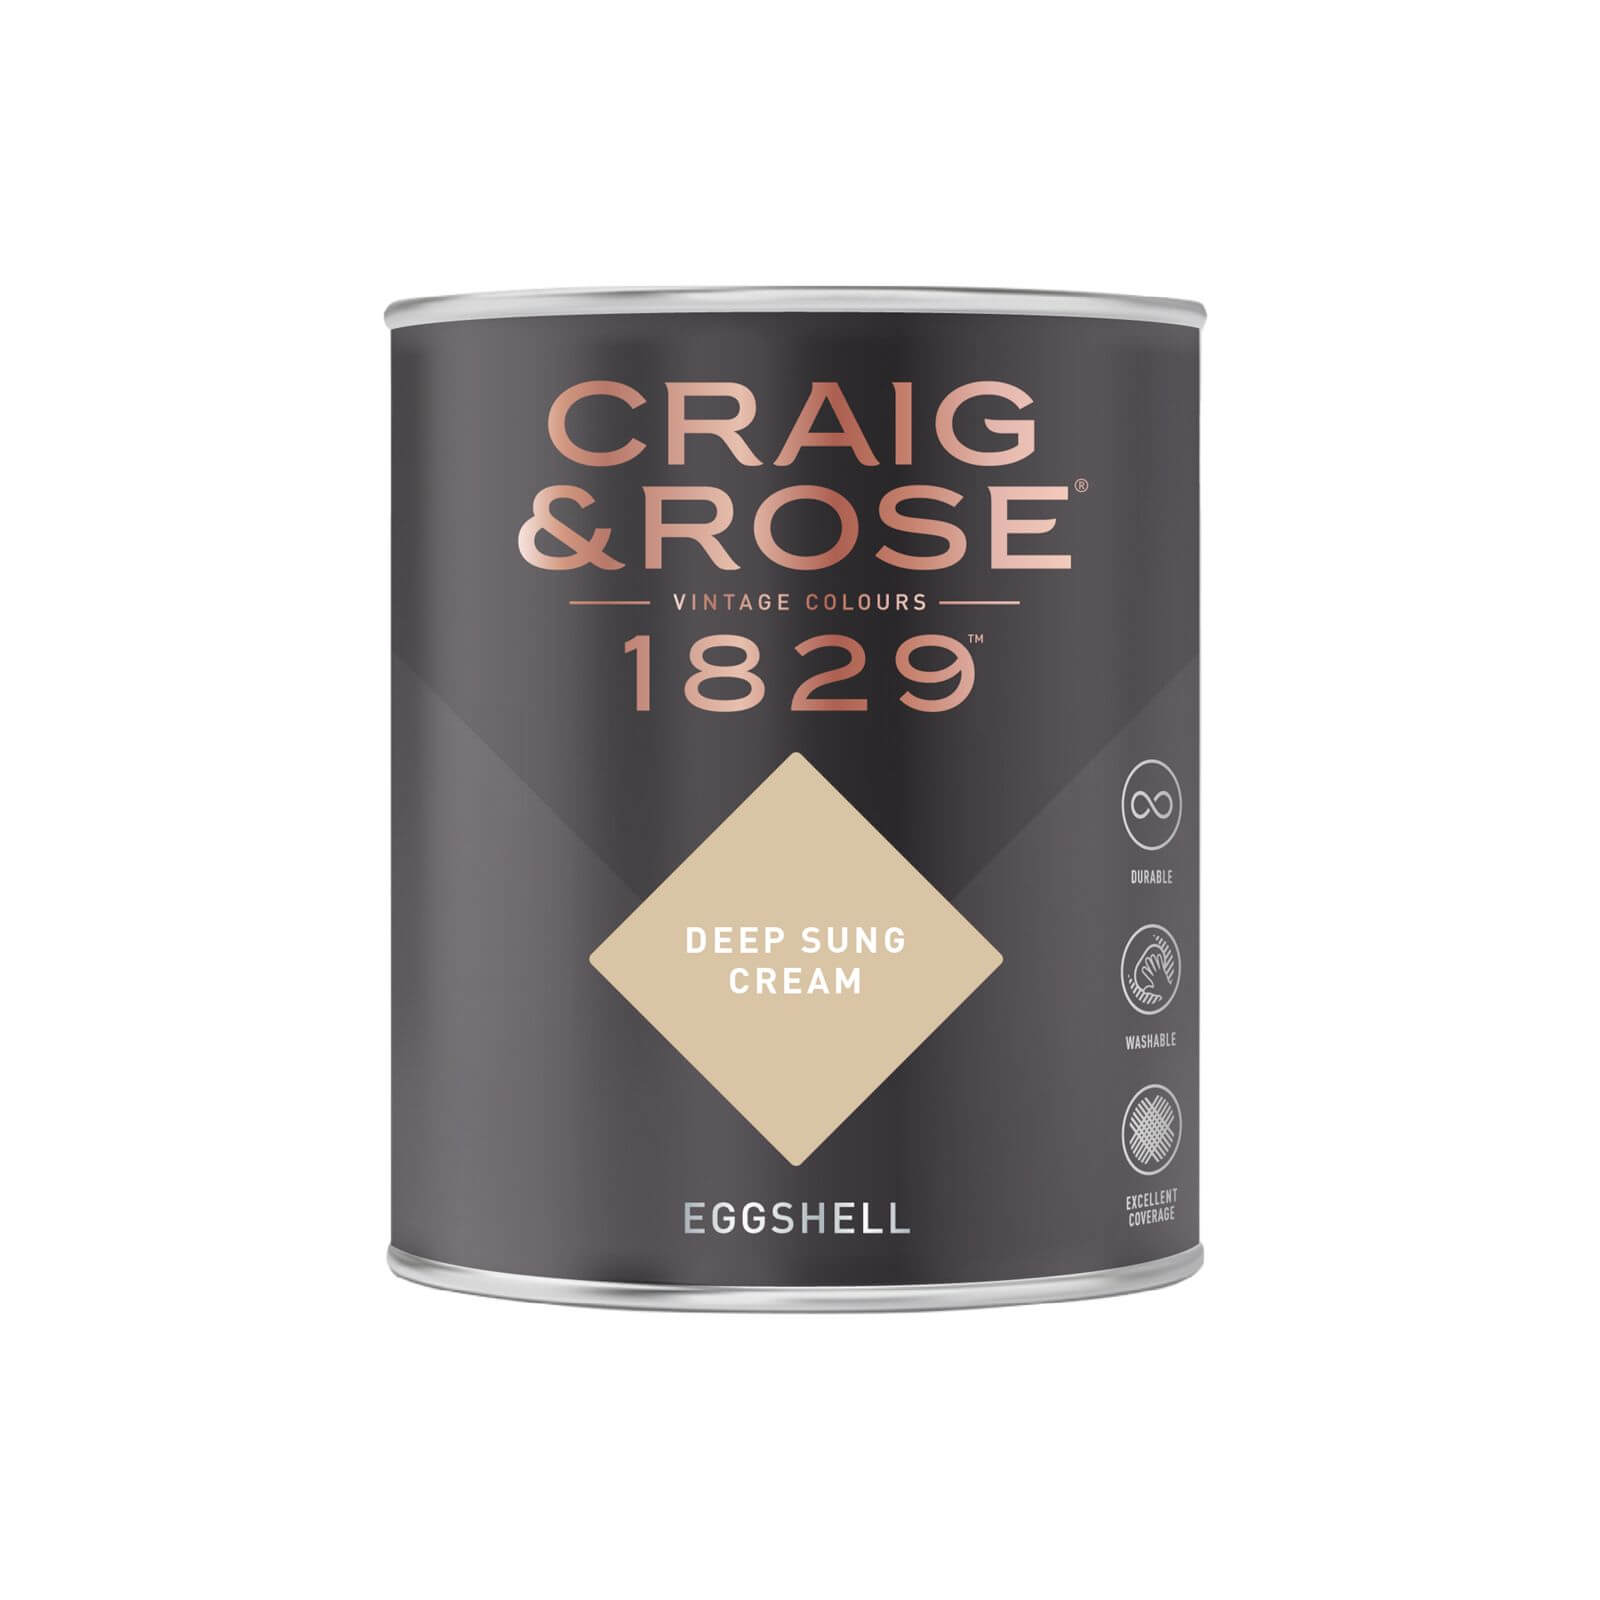 Craig & Rose 1829 Eggshell Paint Deep Sung Cream - 750ml